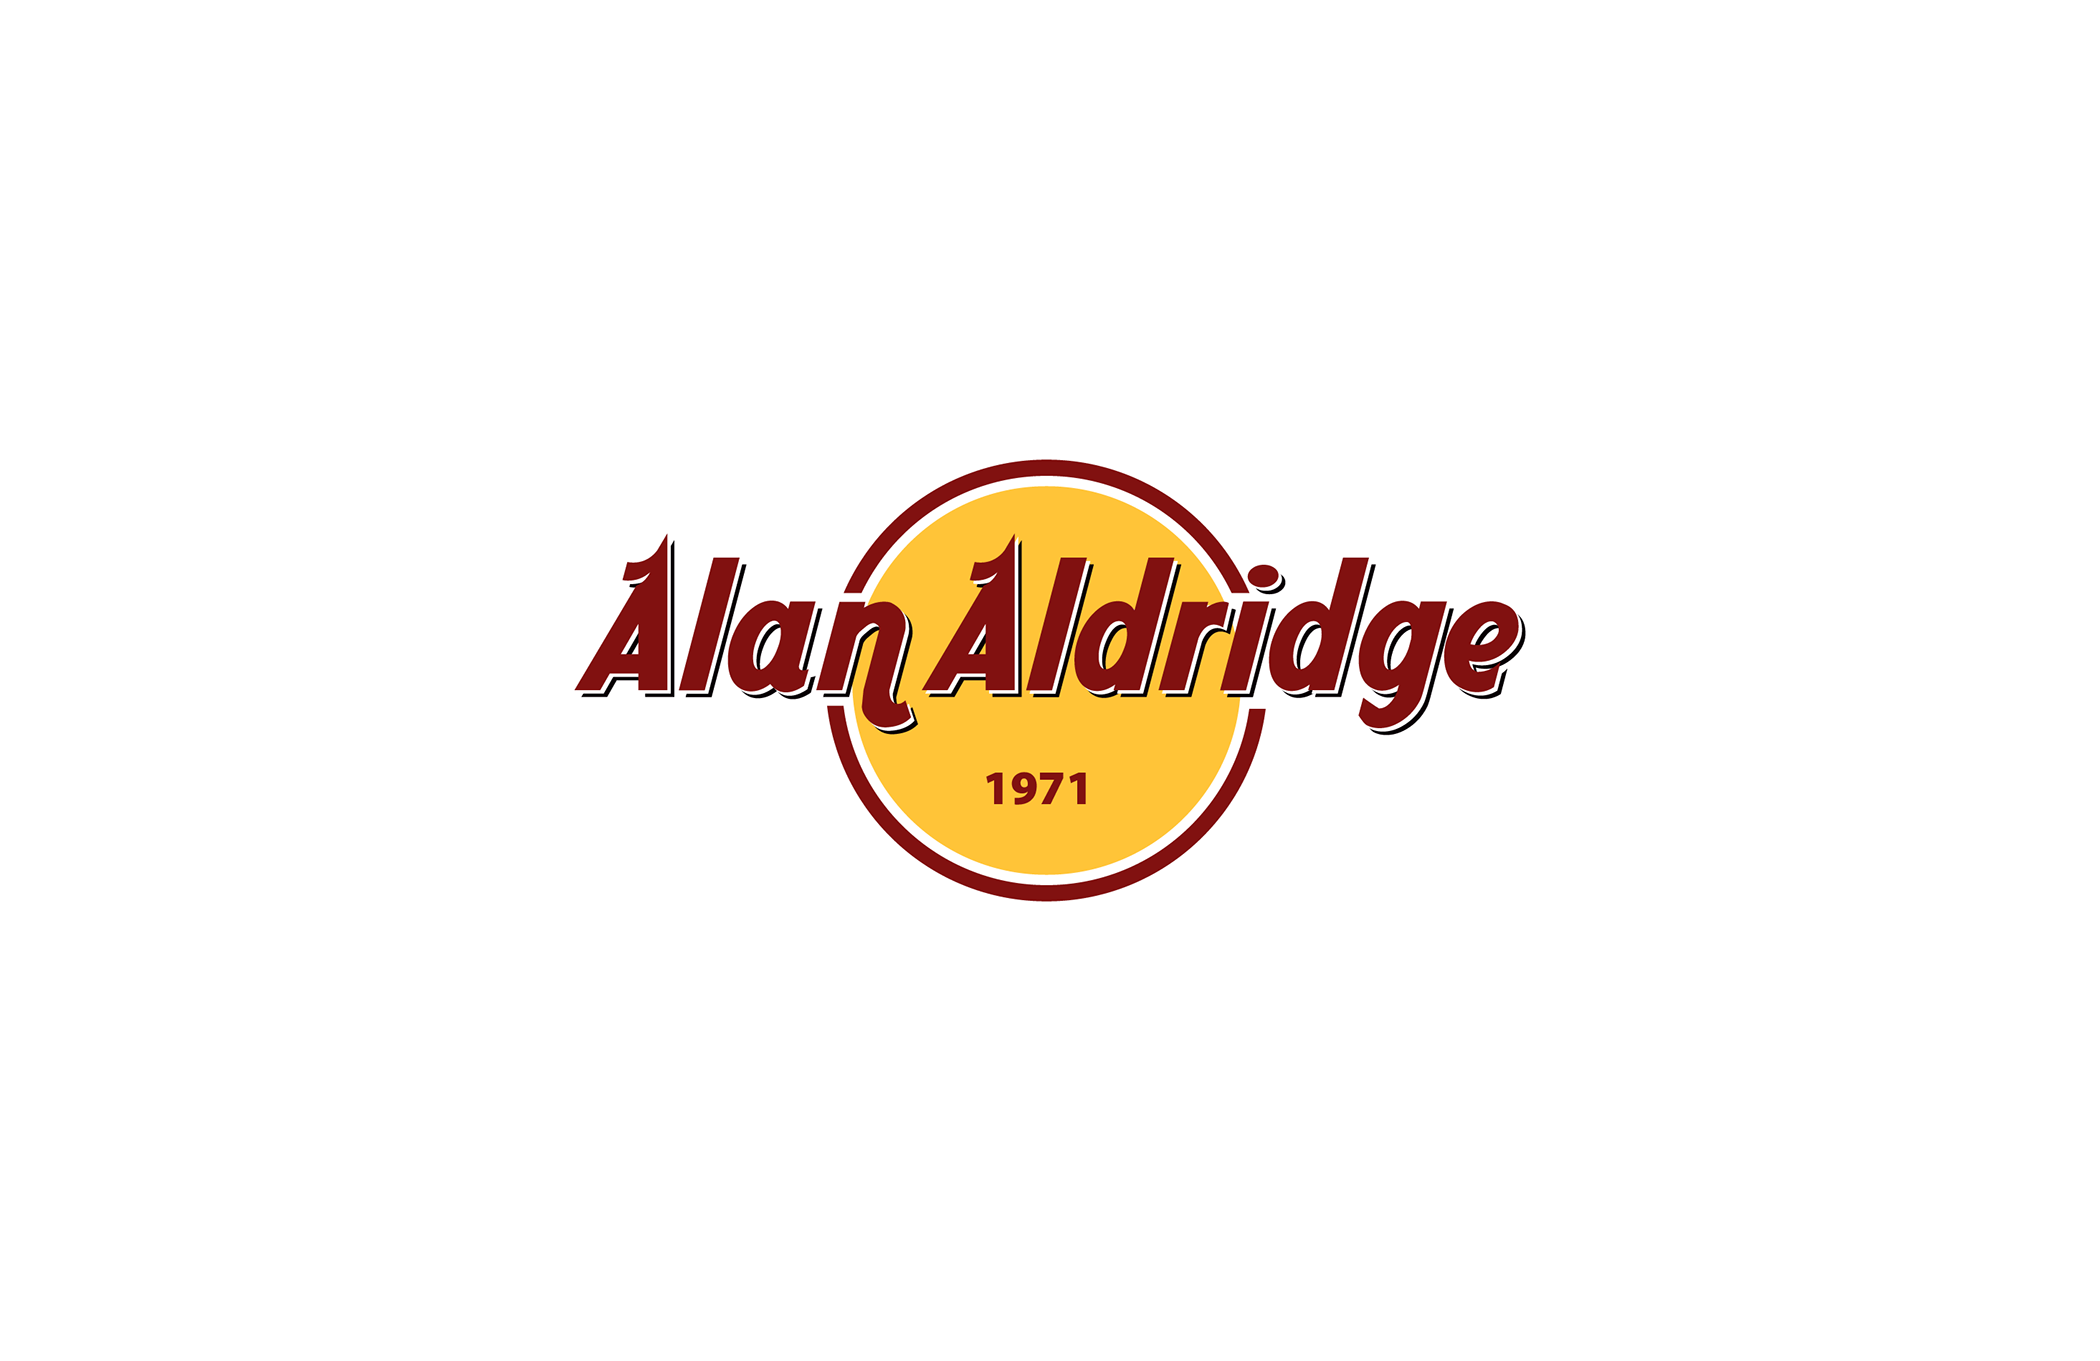 Alan Aldridge - Designer of the Hard Rock Cafe logo